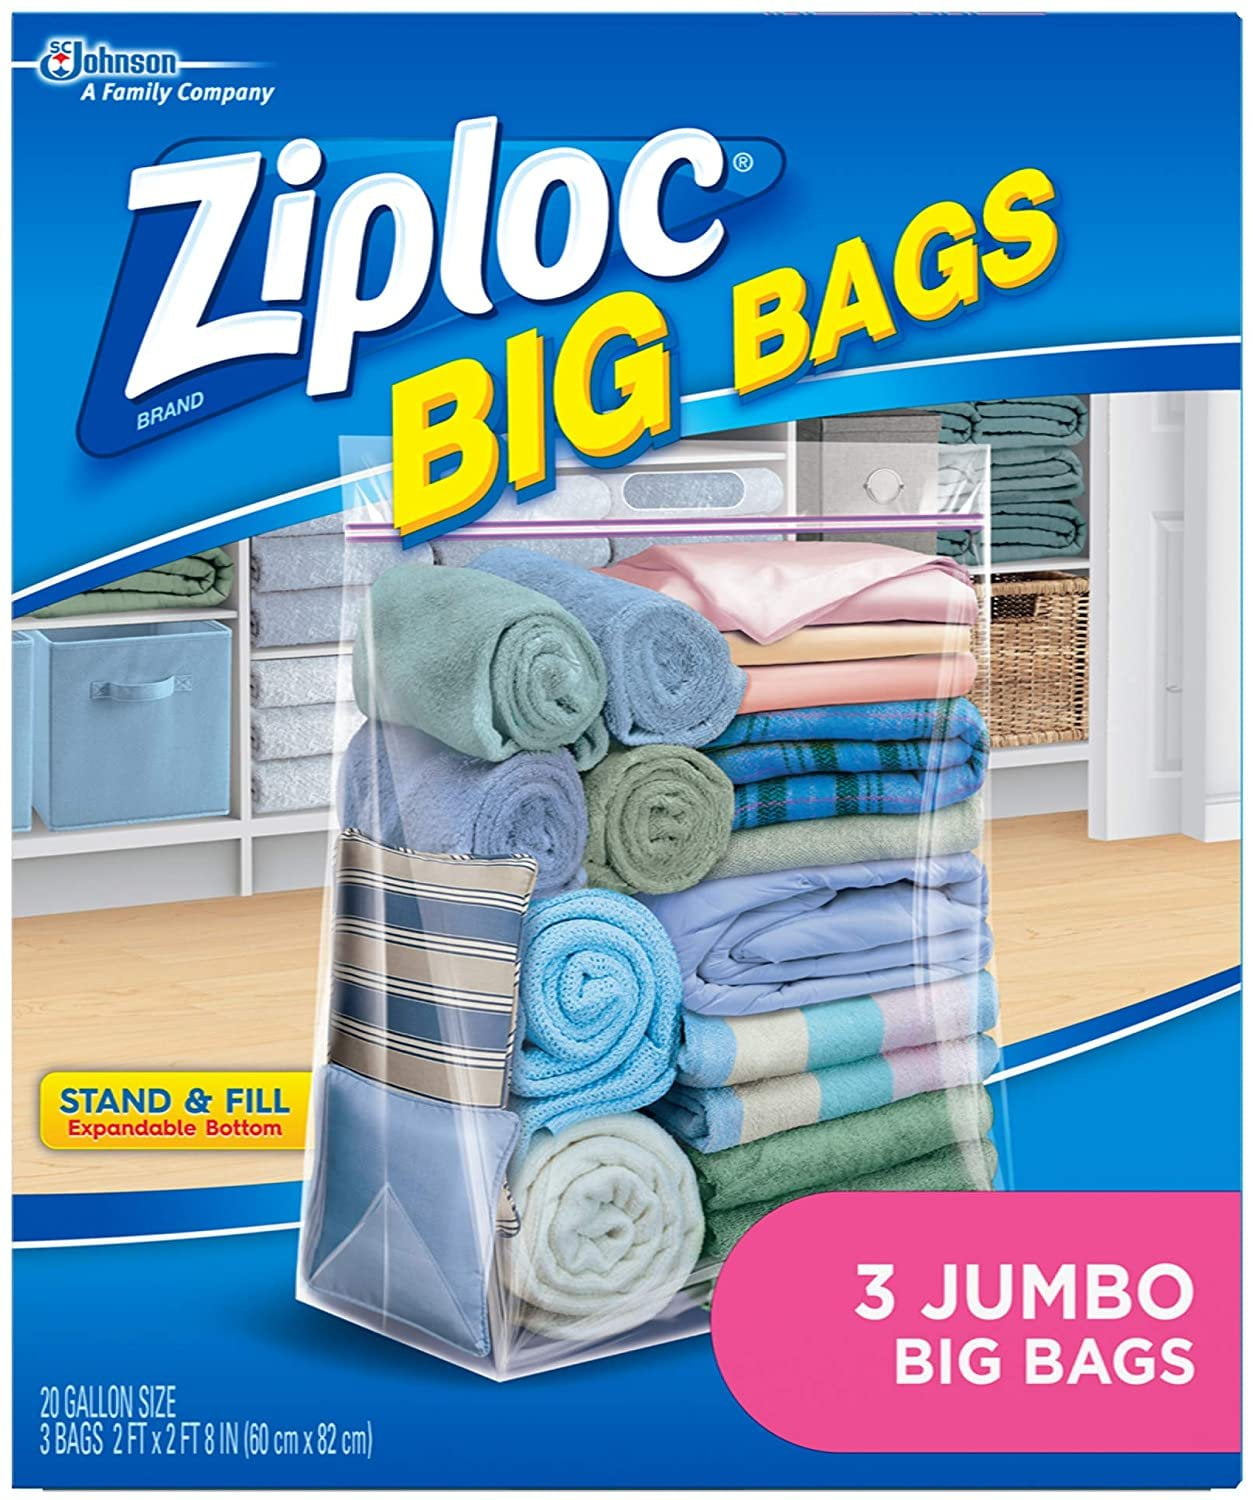 Vintage 12 Ziploc ZIPLOCK HOLIDAY 2001 GRINCH SANDWICH BAGS 2 Sided Image  BAGS